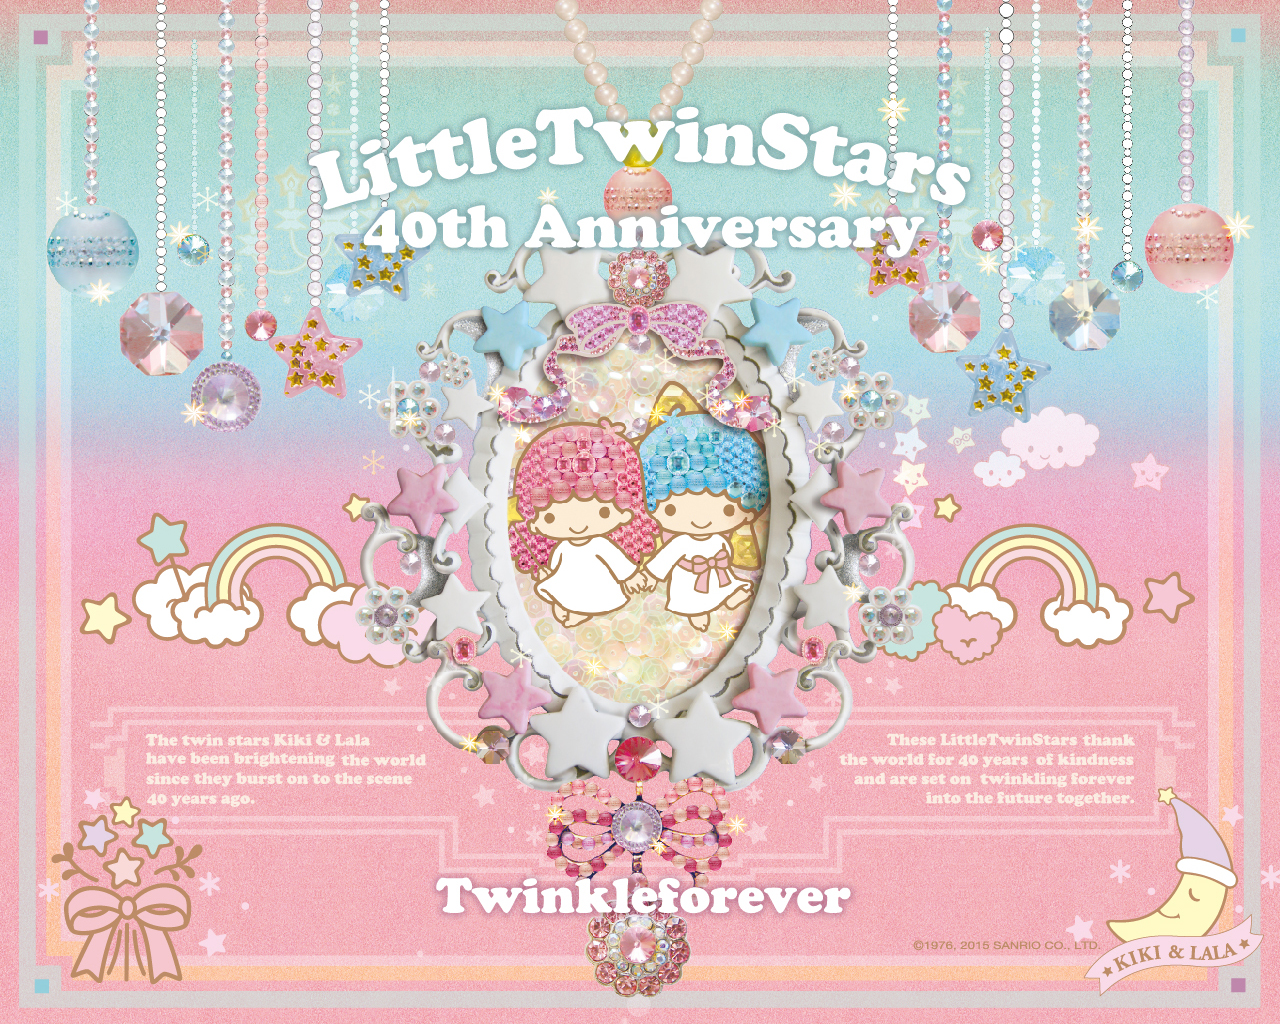 Little Twin Stars Memorial Design Wallpaper - キキララ ポーム ポーム プリン , HD Wallpaper & Backgrounds